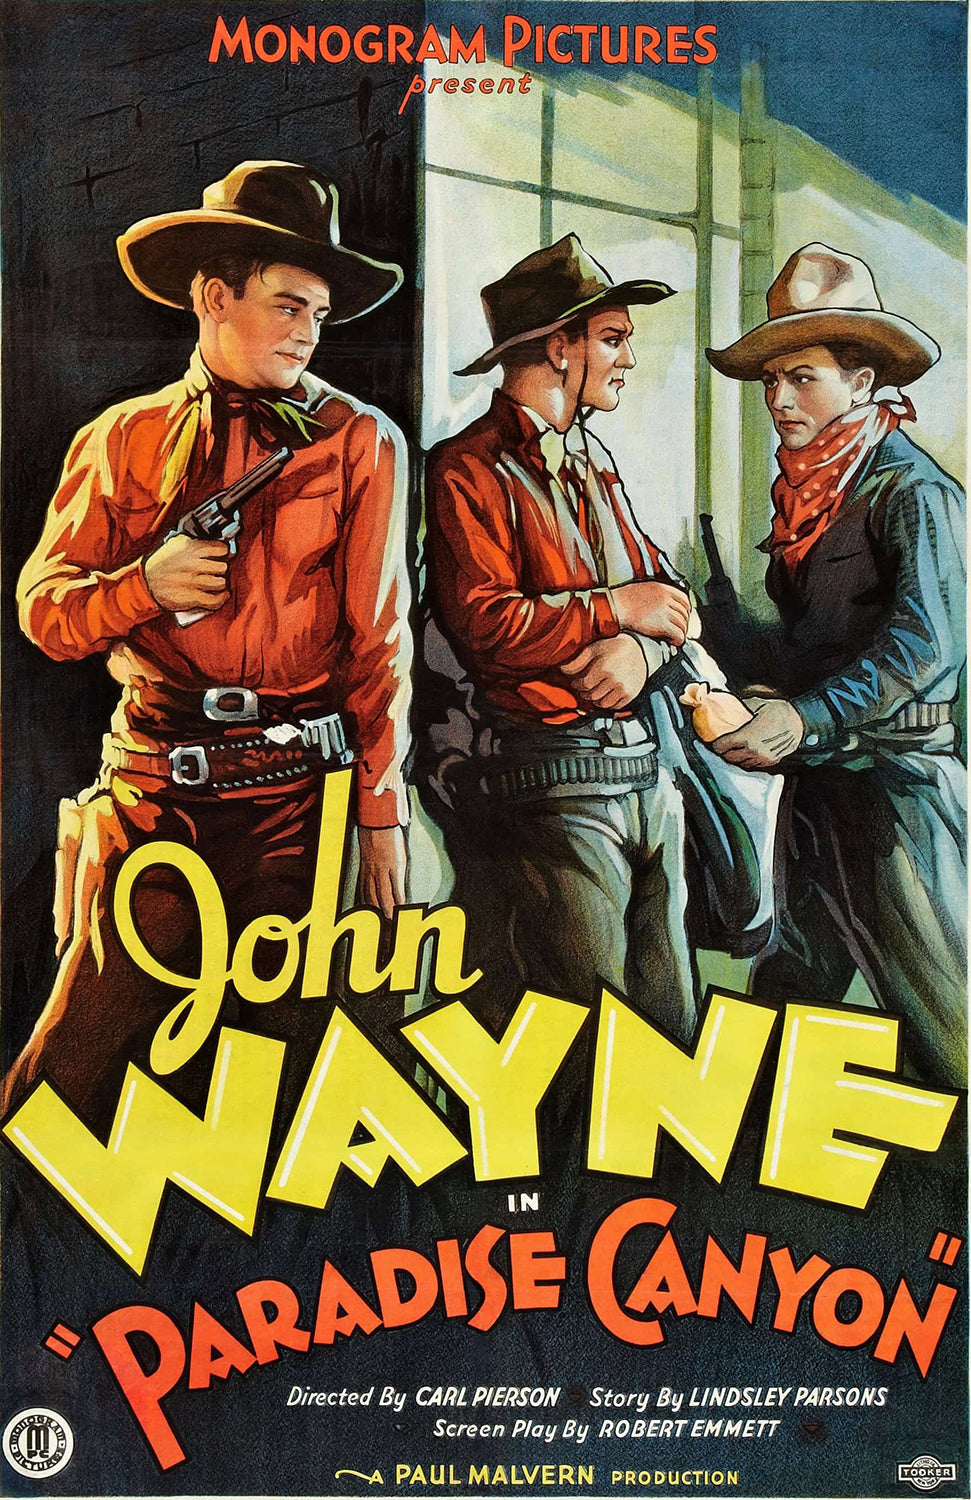 Paradise Canyon Starring John Wayne (1935) Vintage Western Movie Poster